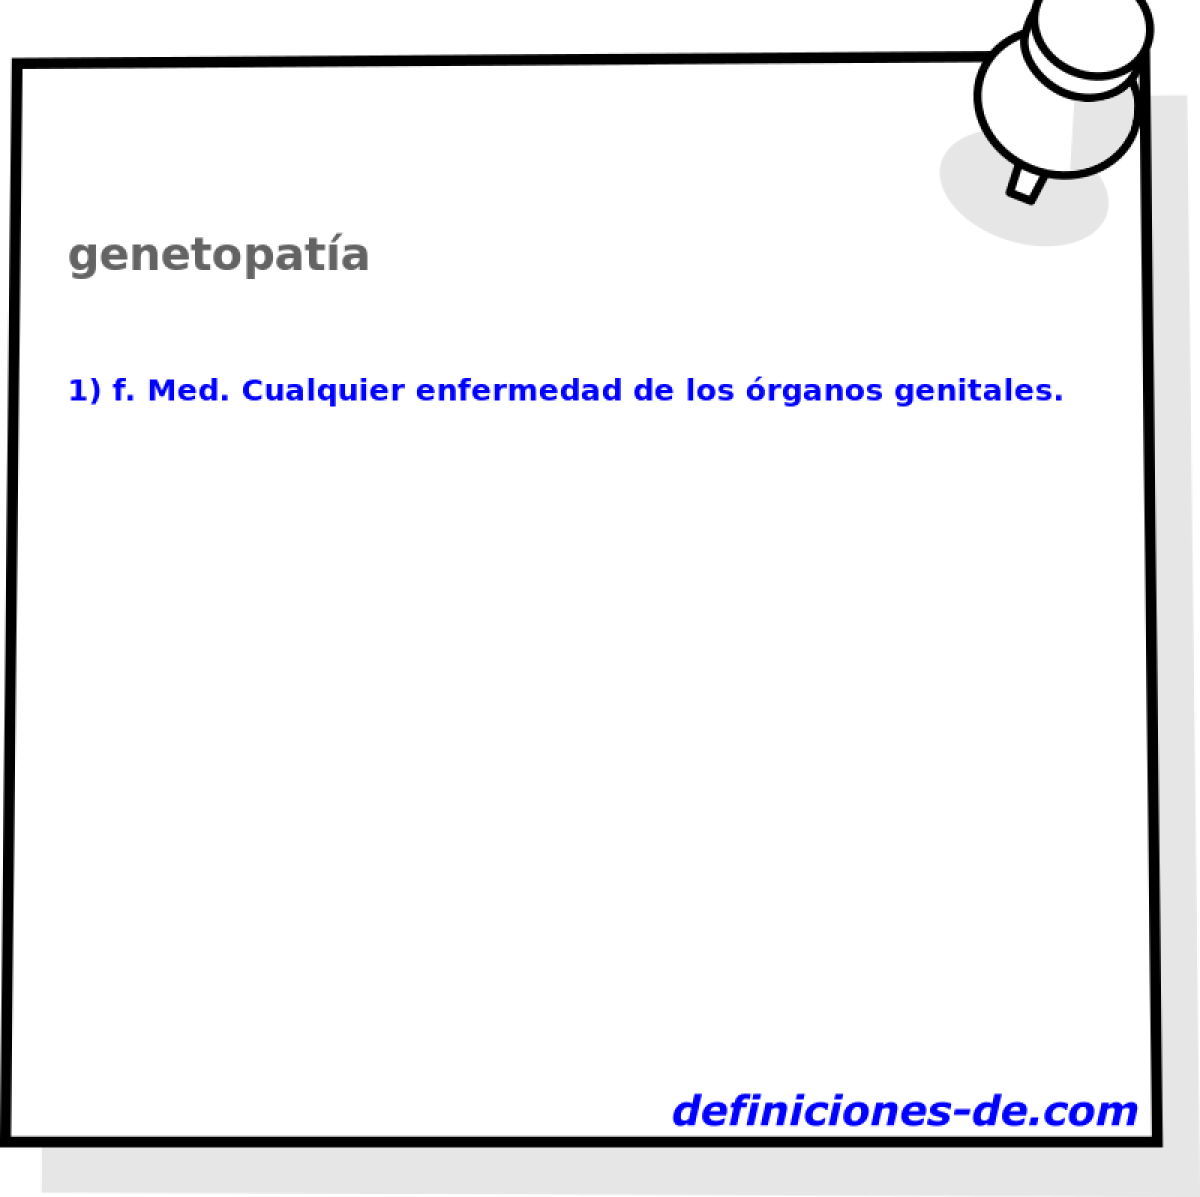 genetopata 